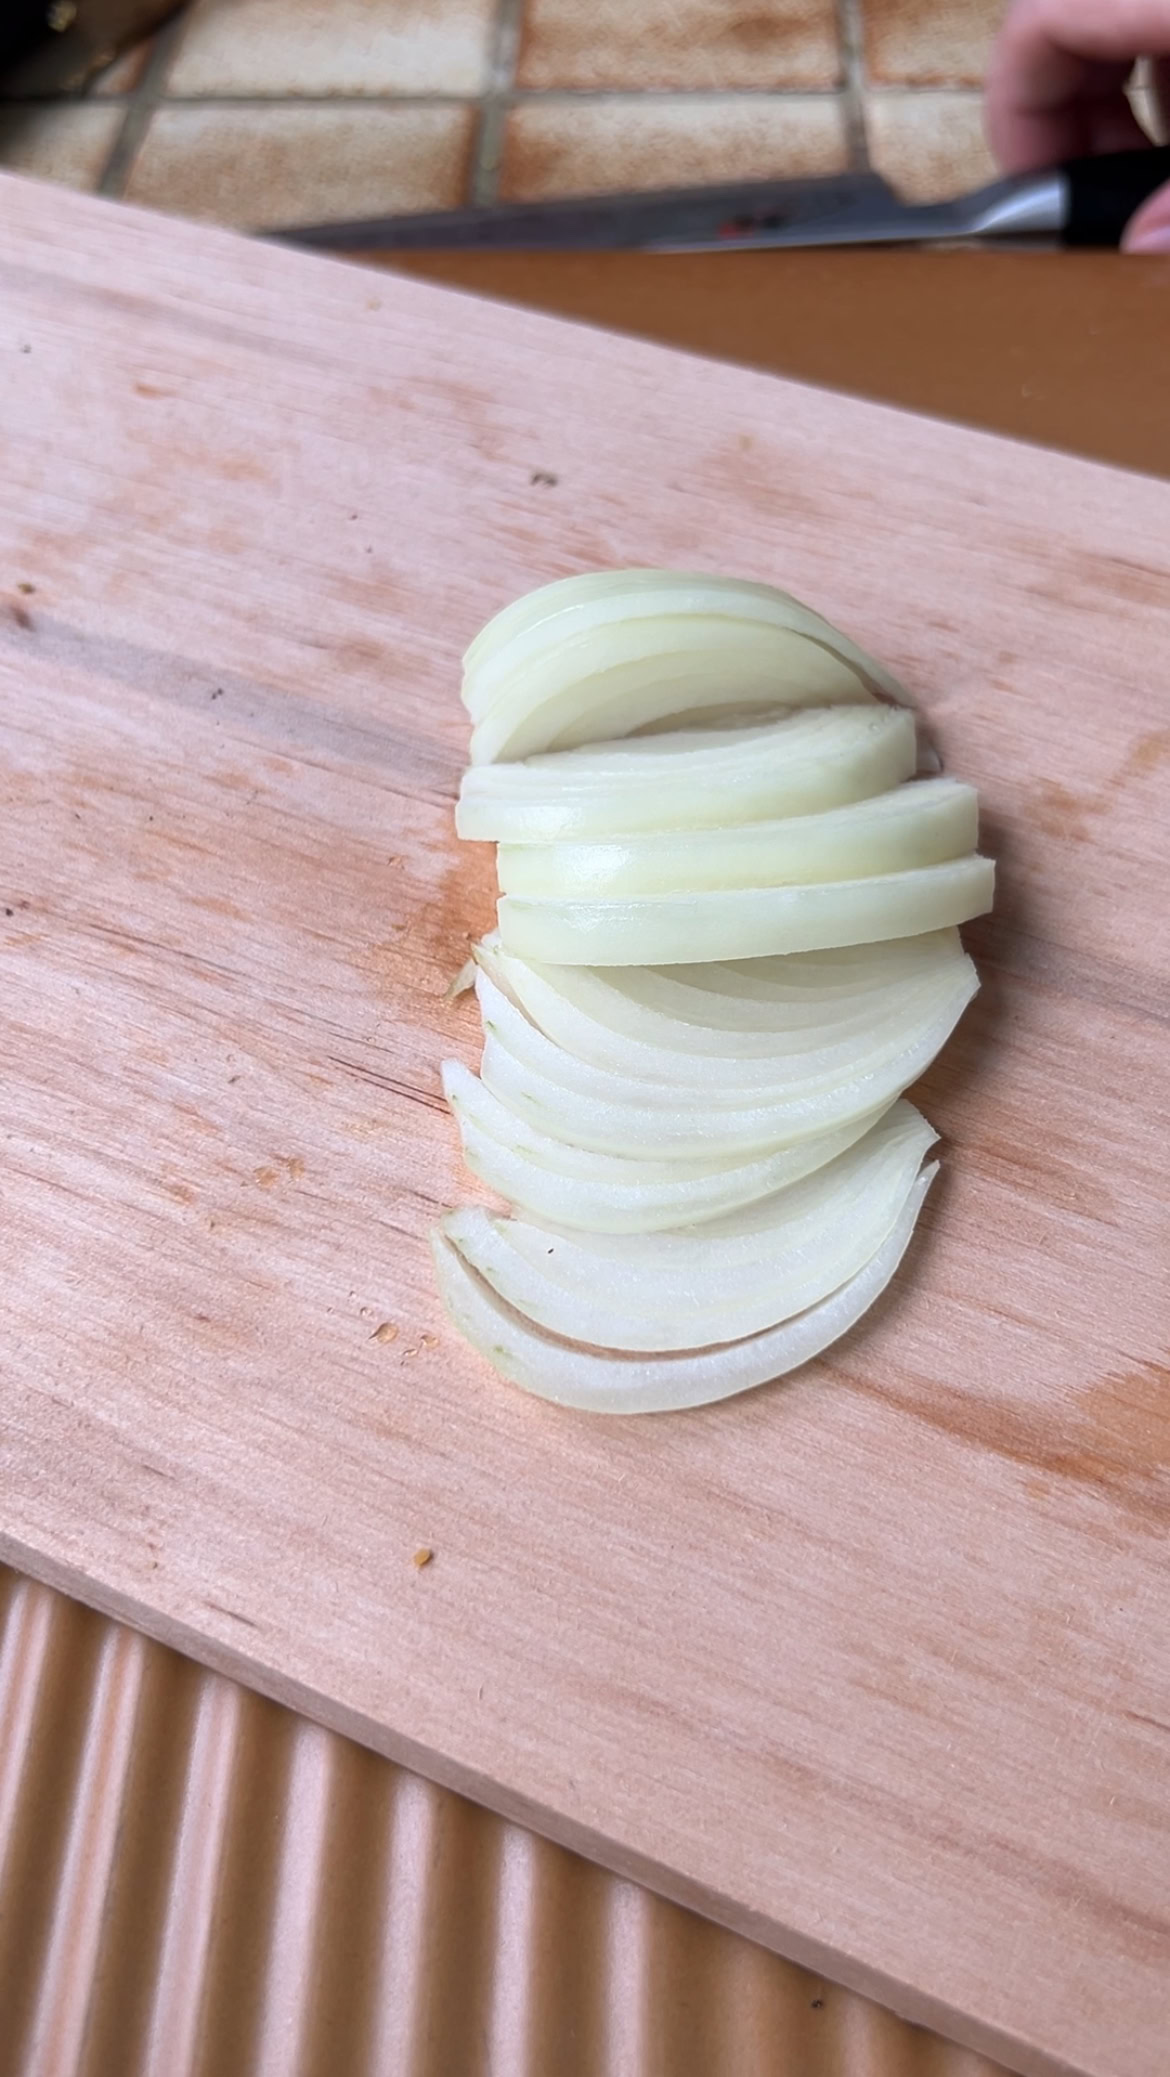 Onion cut into strips on a wooden board.